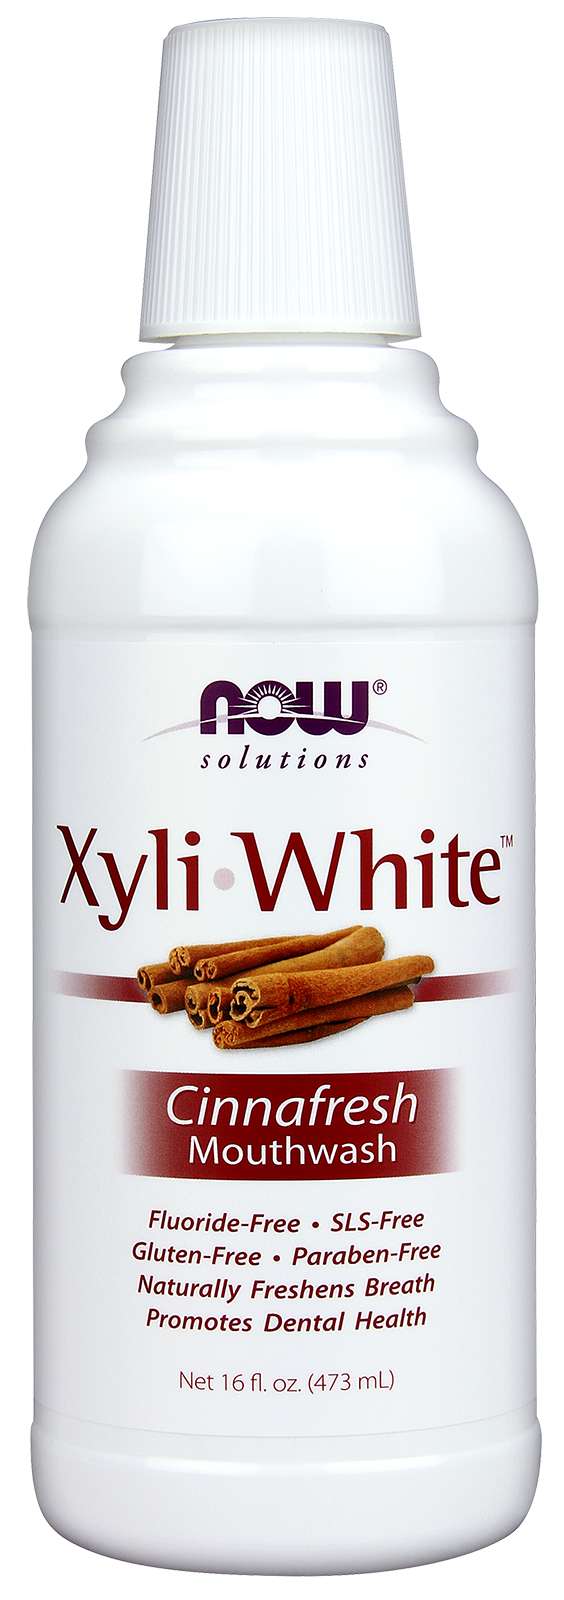 Xyliwhite Cinnamon Mouthwash 473mL